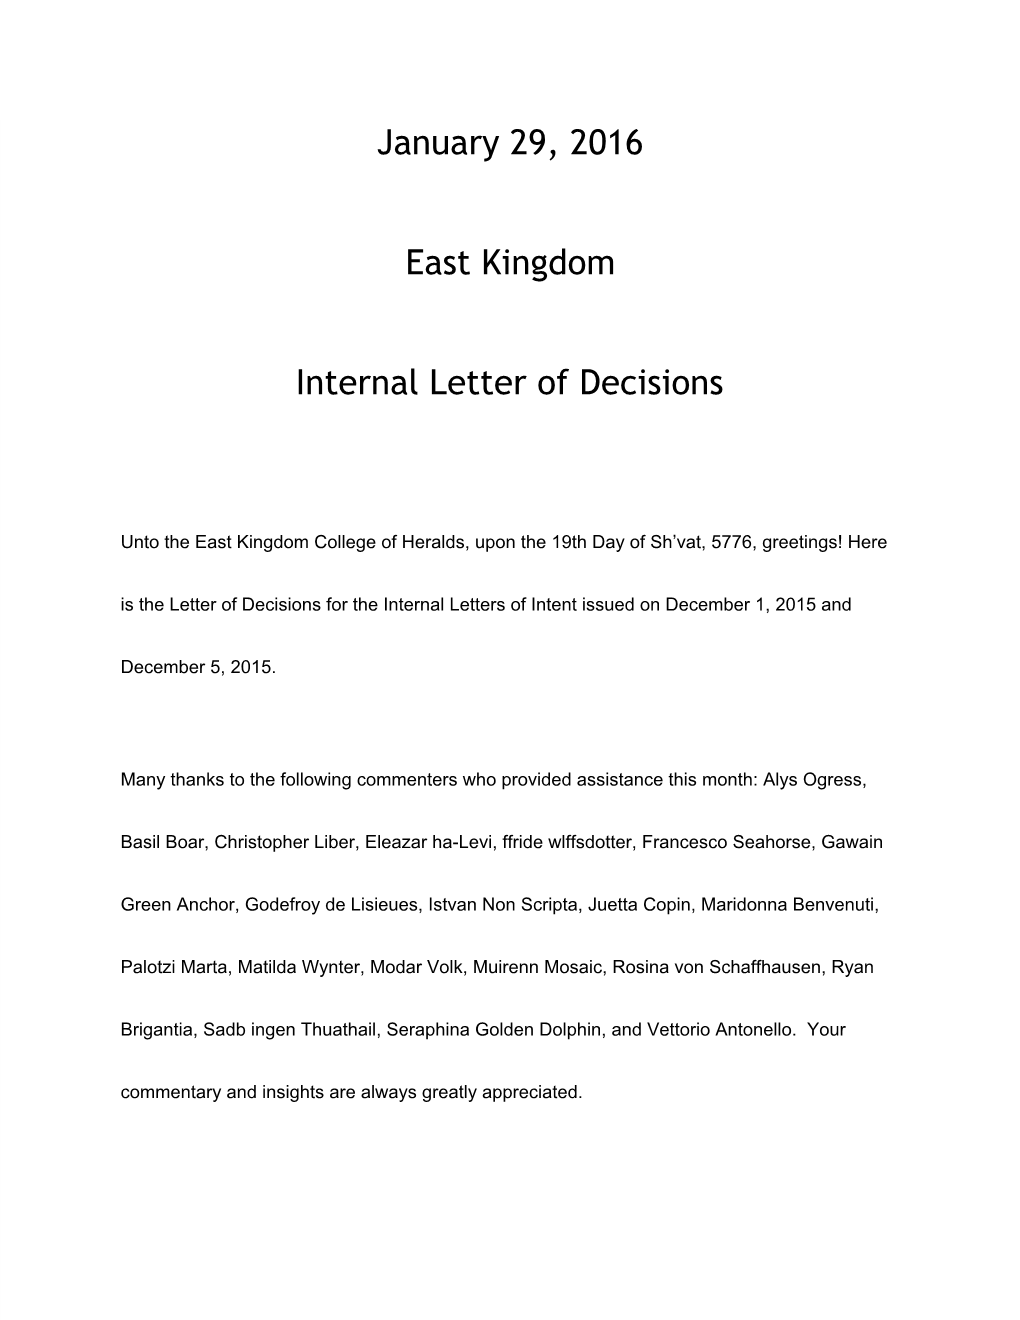 January 29, 2016 East Kingdom Internal Letter